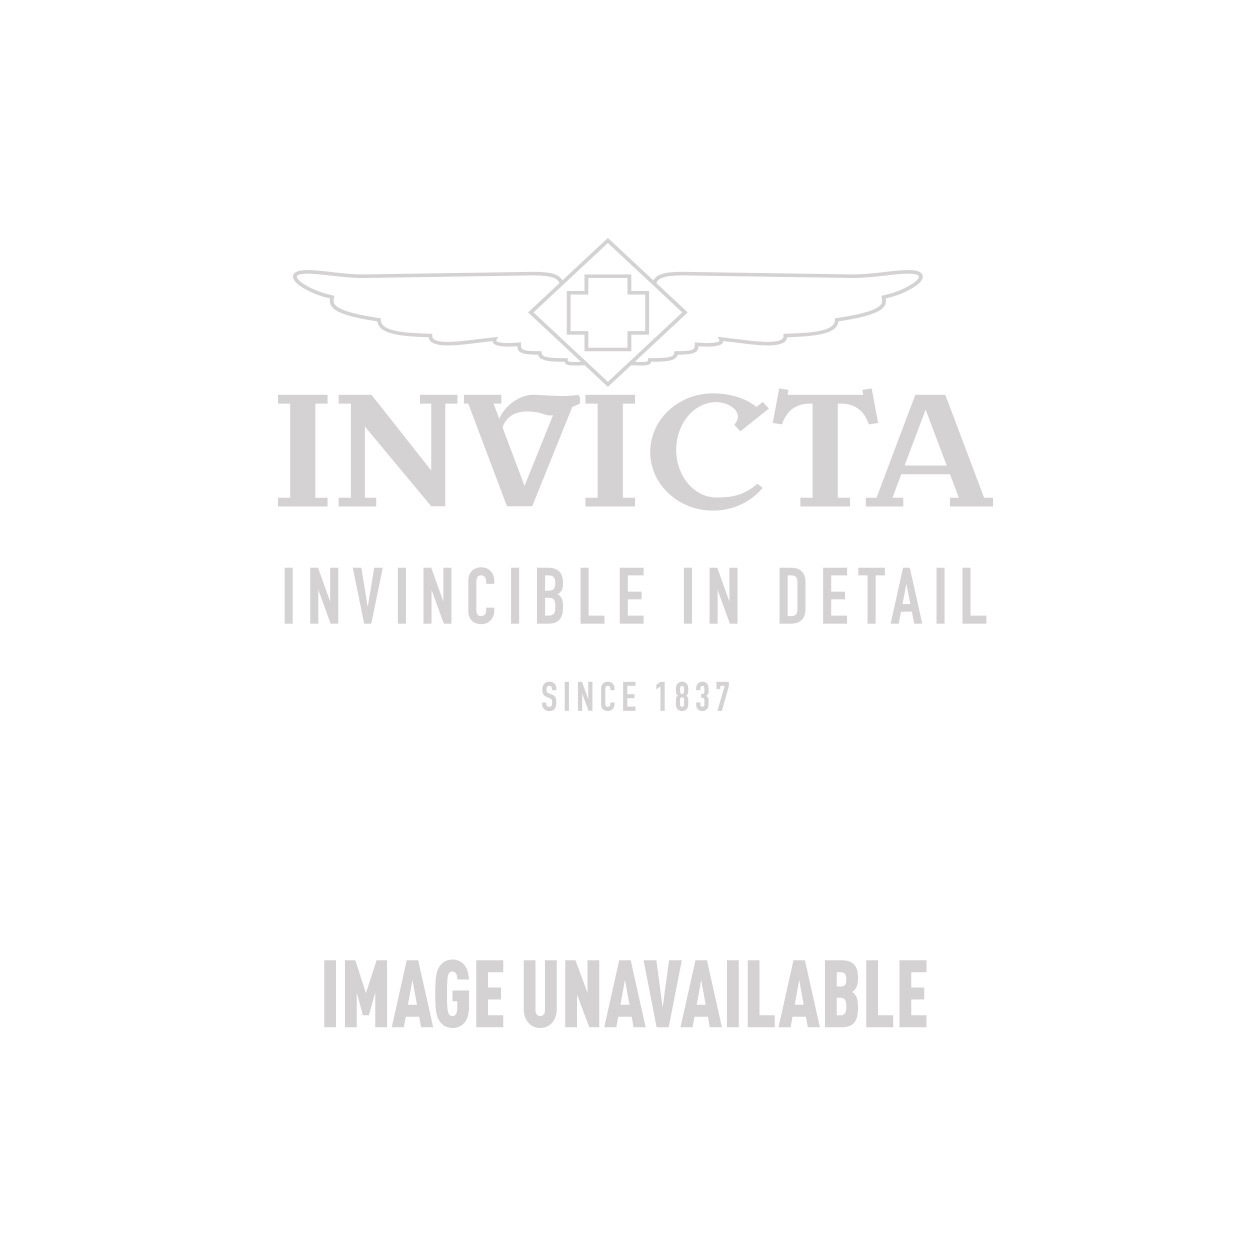 Invicta Angel Quartz Watch Stainless Stee Tortoise band - Model 20510